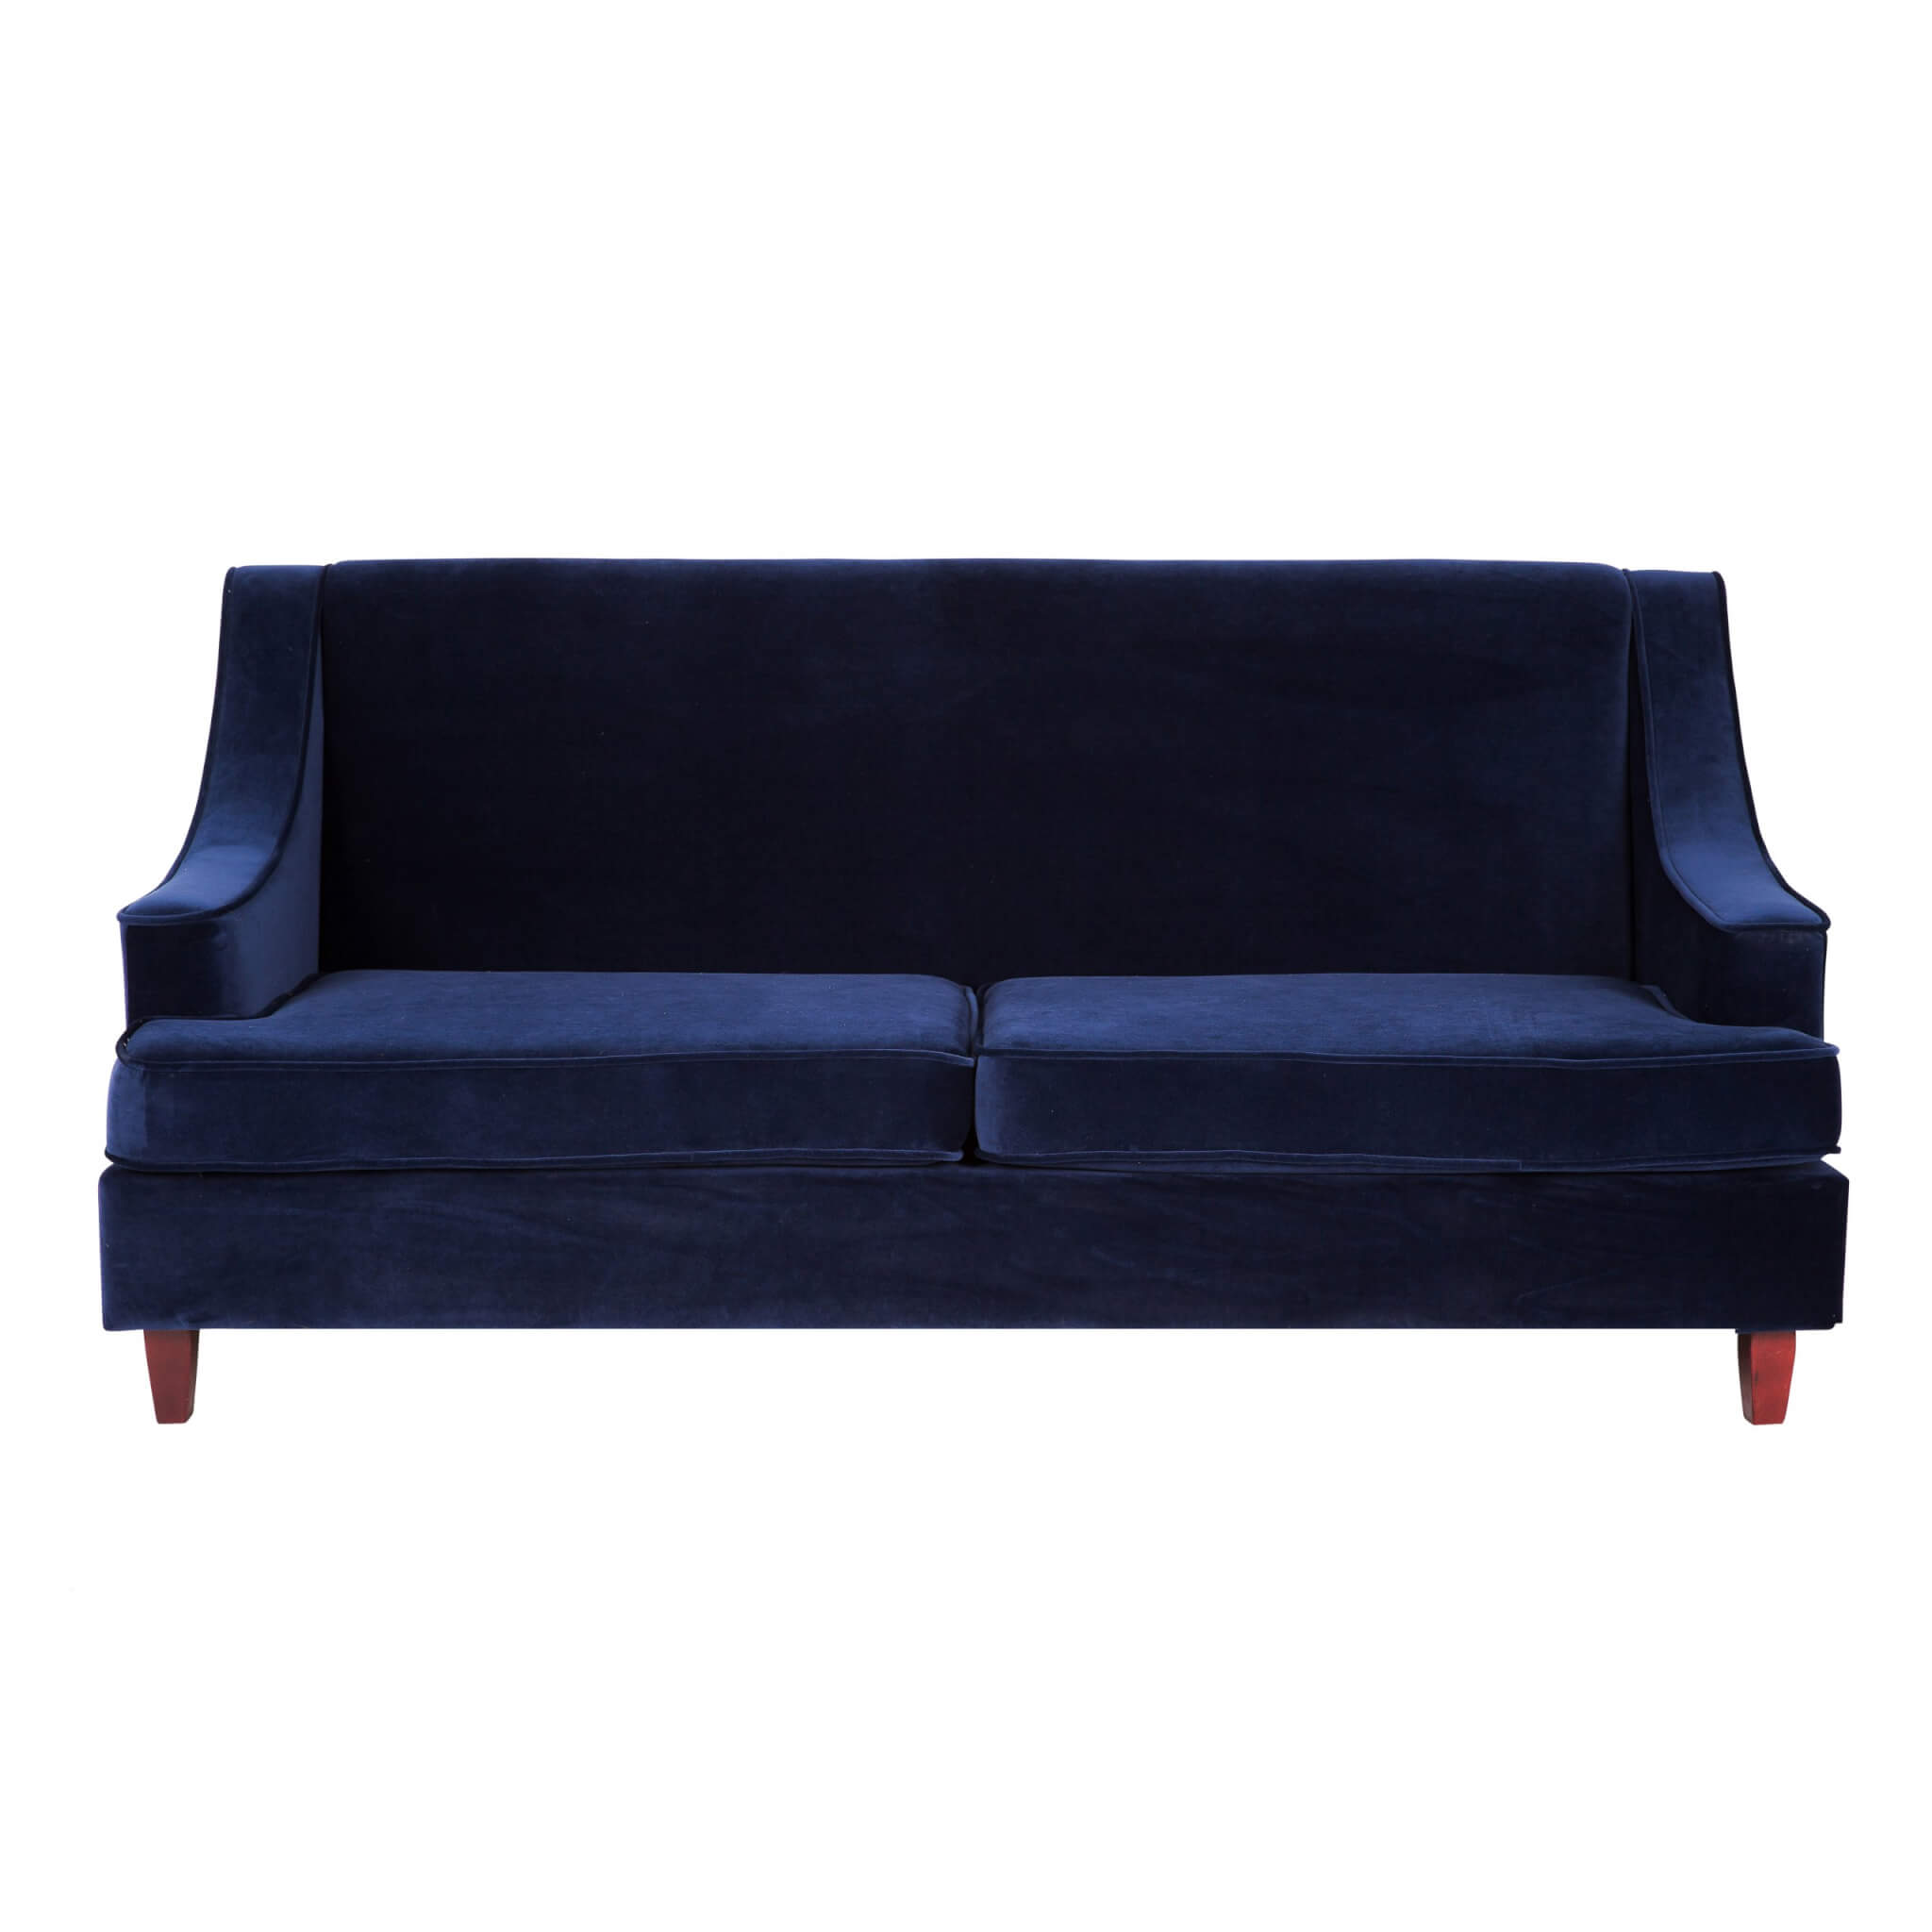 Hudson Three Seater Lounge – Navy Blue Velvet – 190cmL x 85cmW x 89cmH